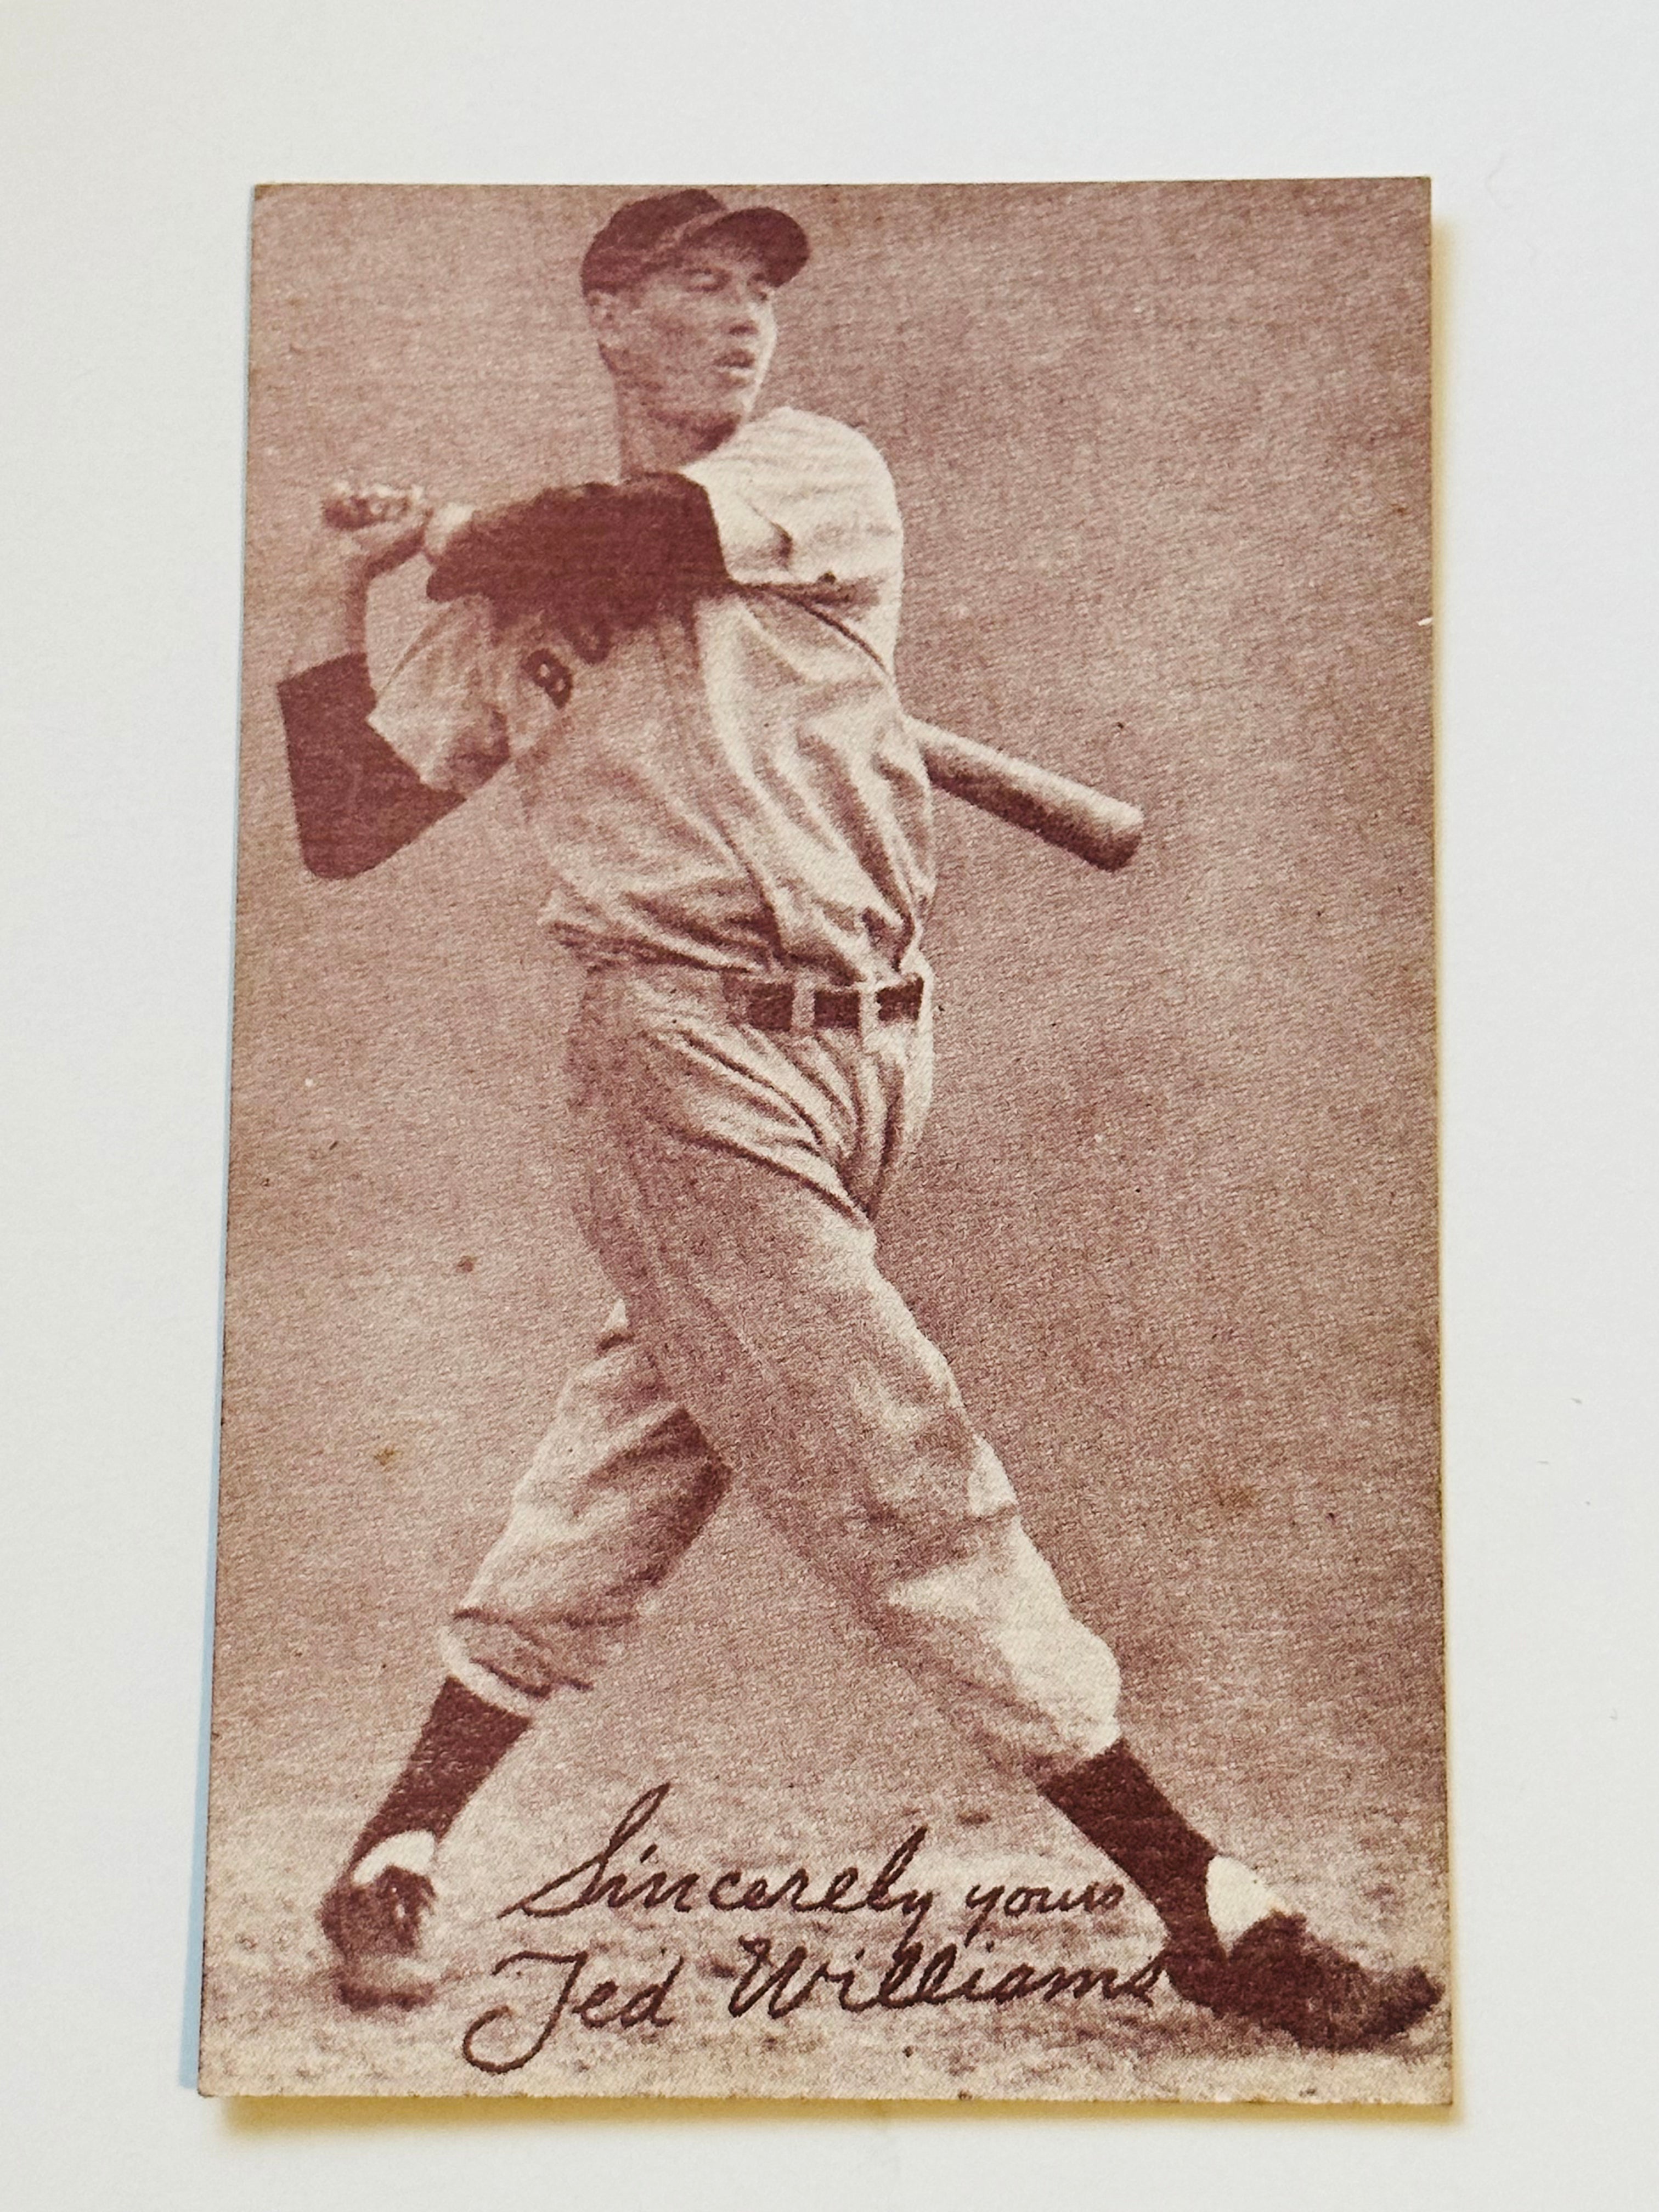 Ted Williams rare high grade Exhibit baseball card 1946